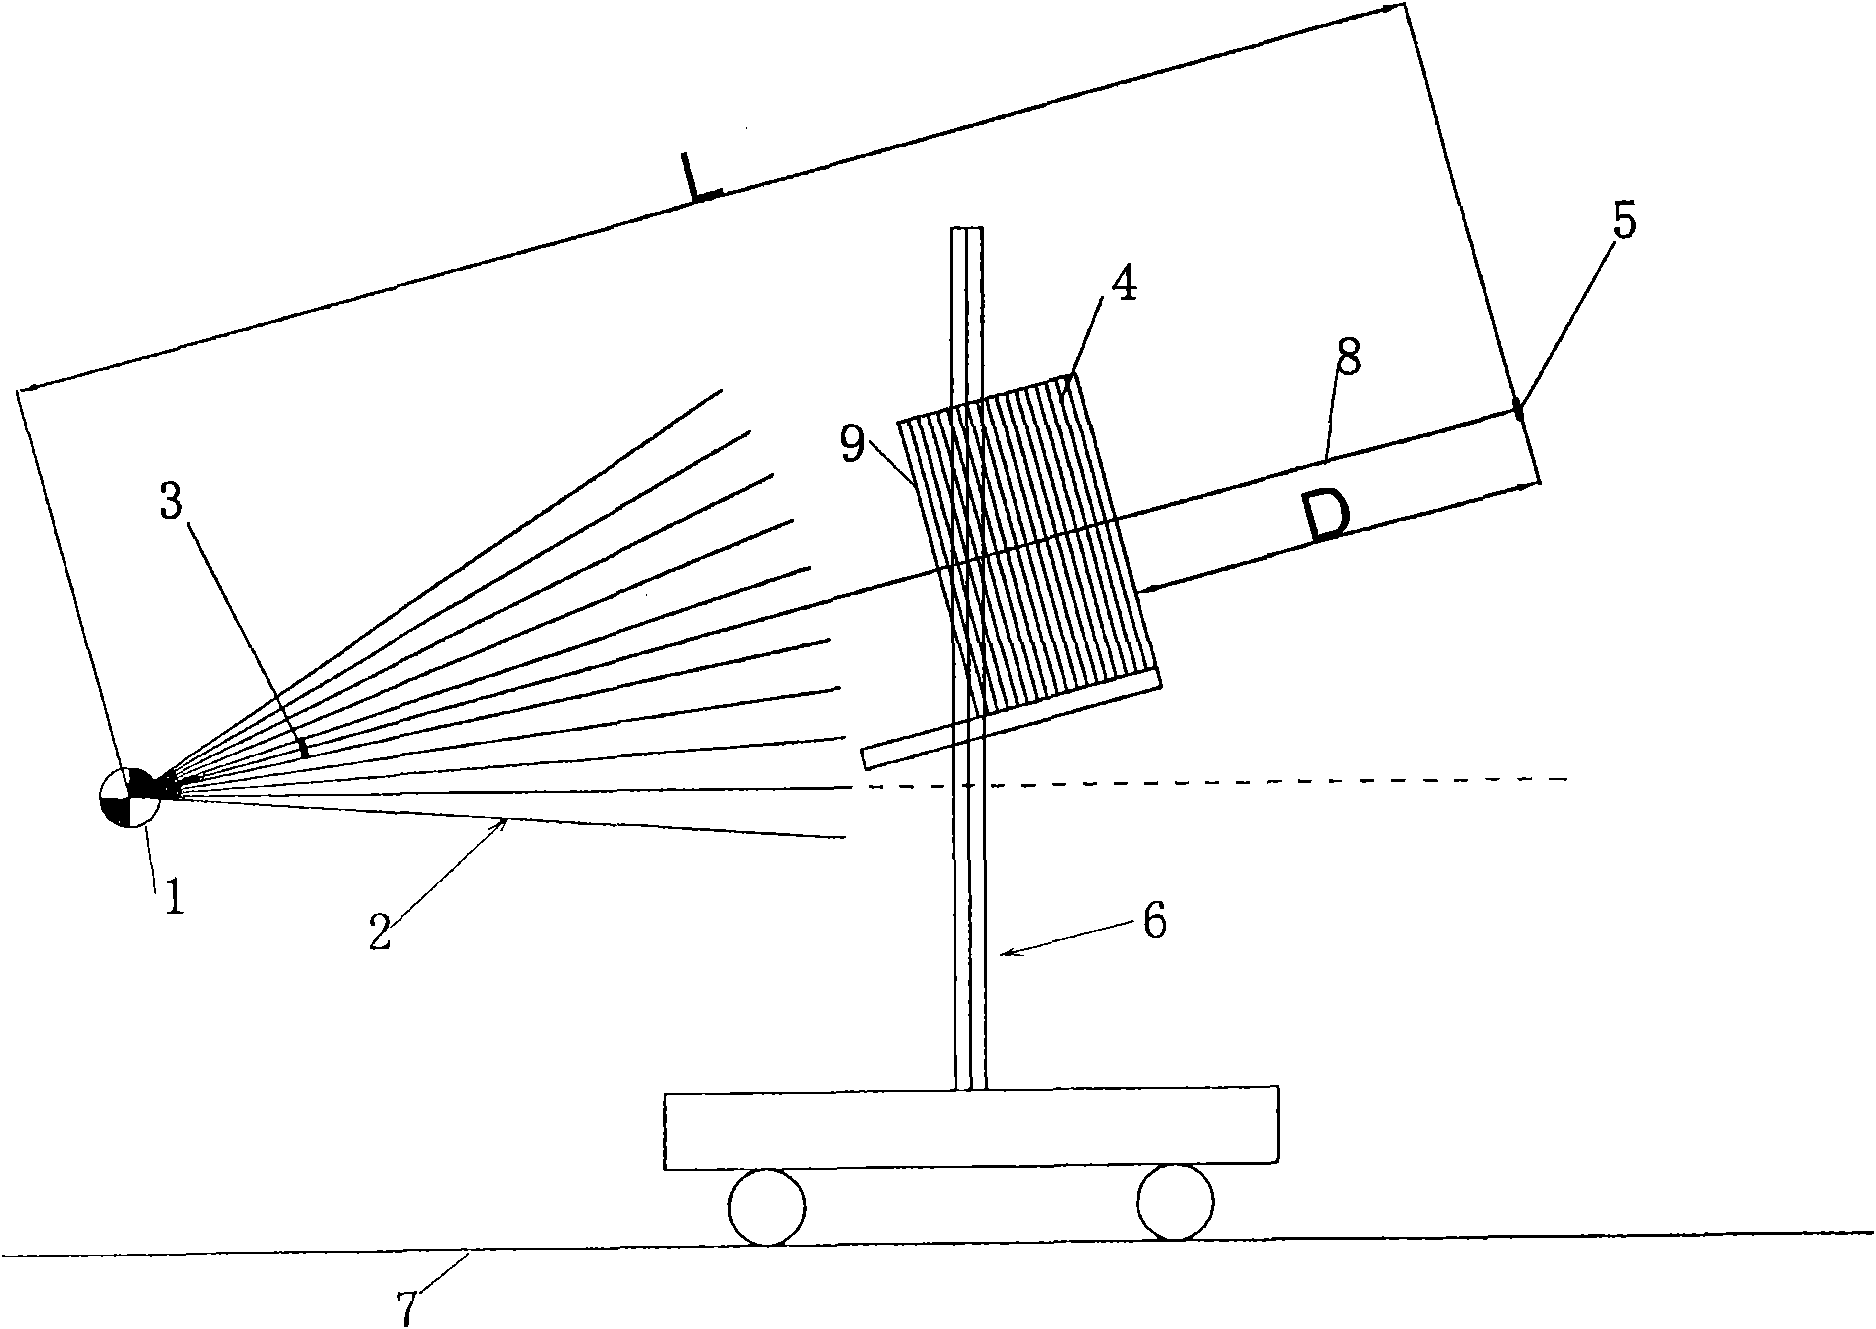 Method for measuring energy of accelerator